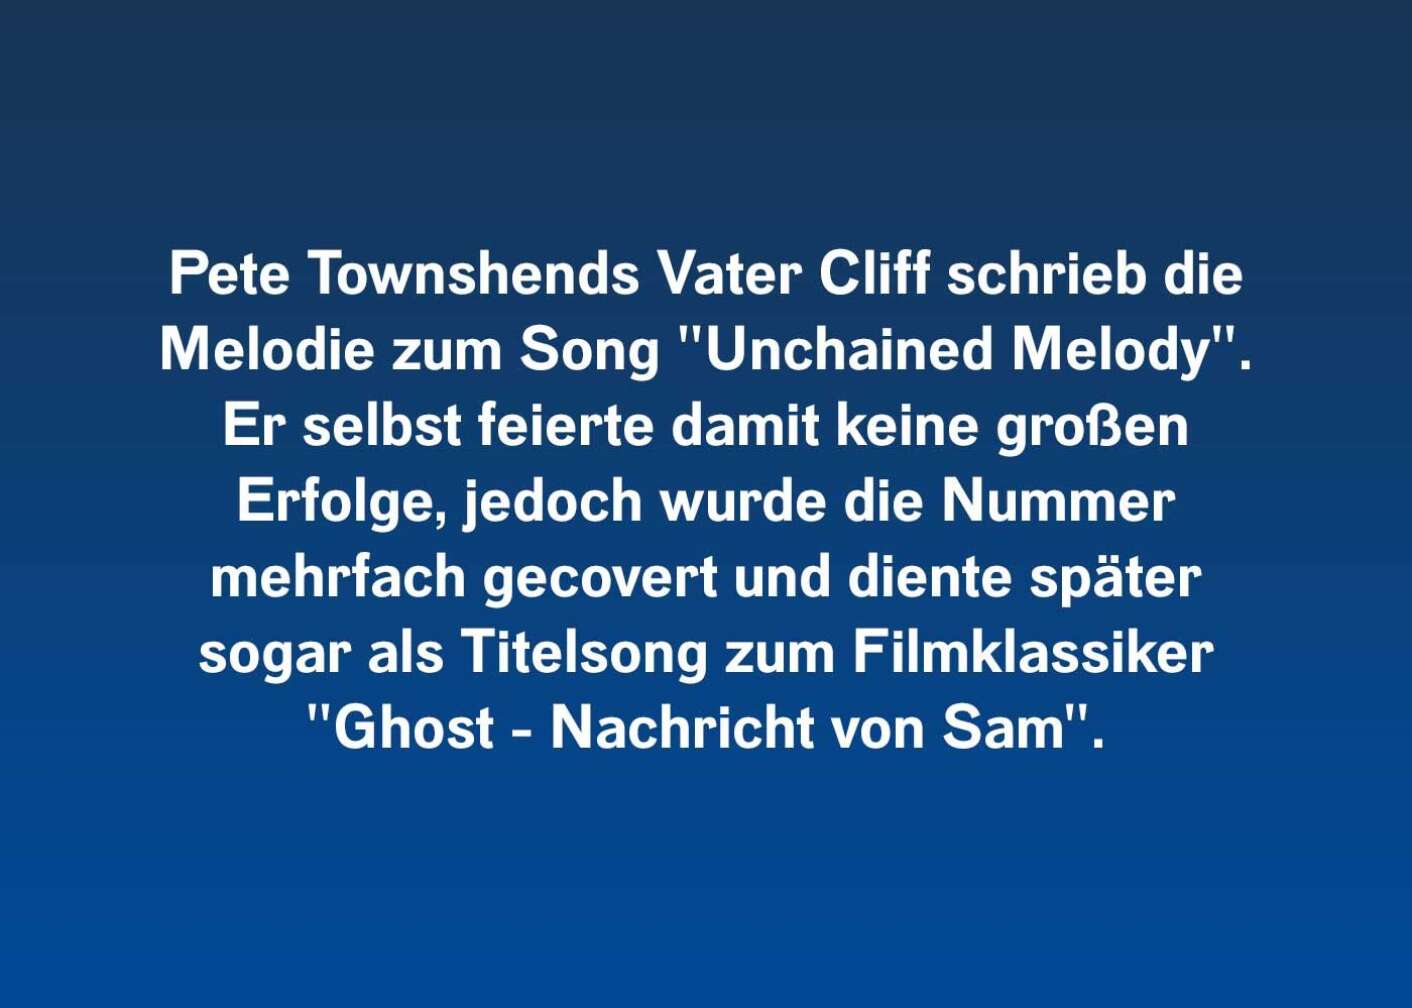 Pete Townshend-Fakten